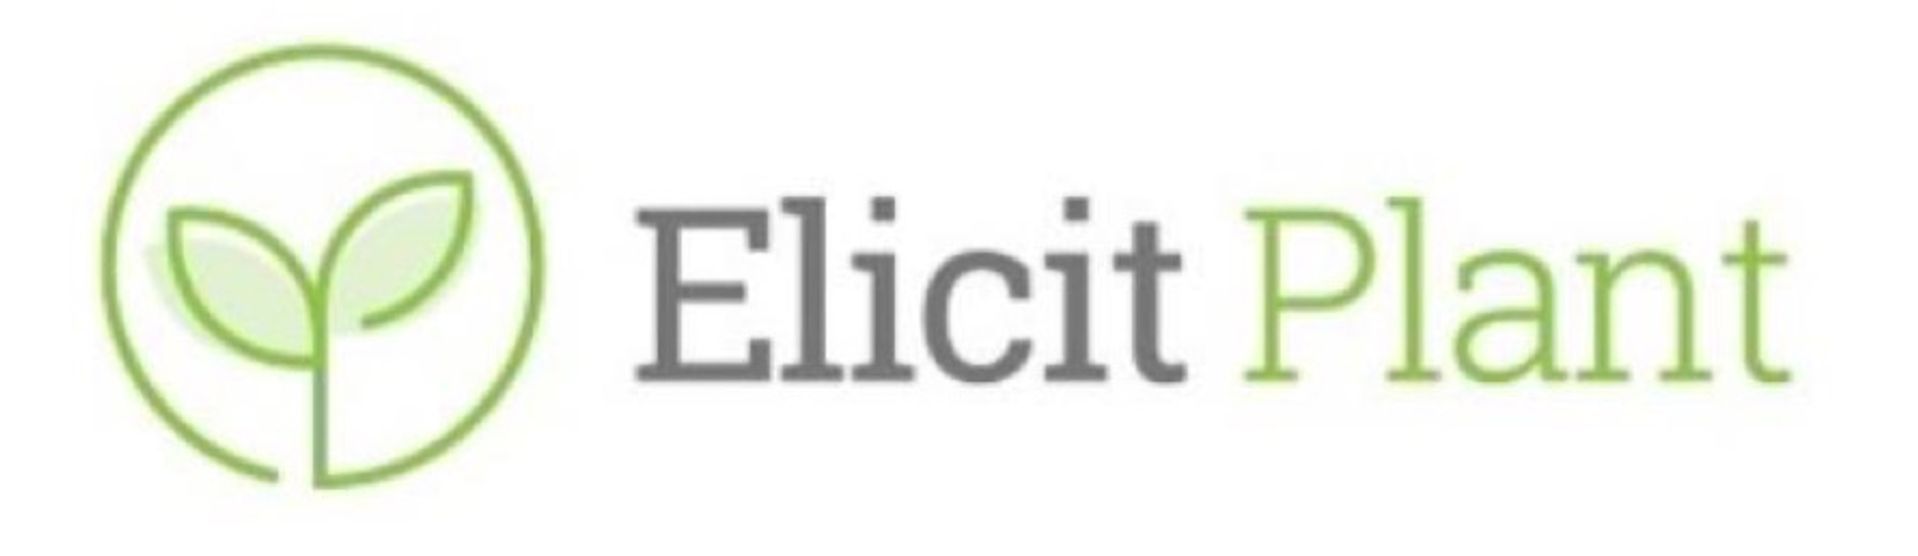 Elicit Plant small logo